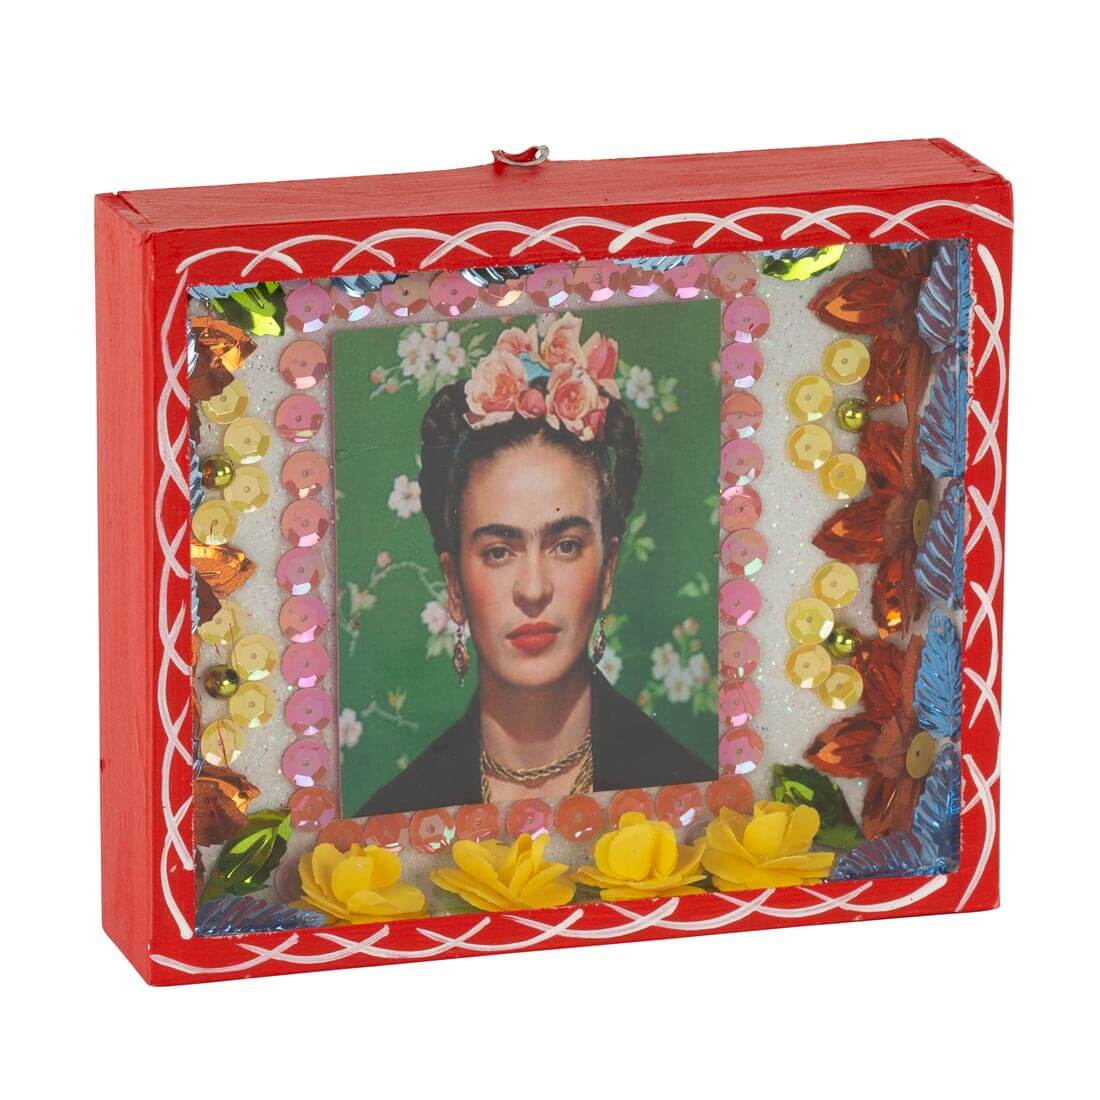 Fantastik Decorative Frida Box